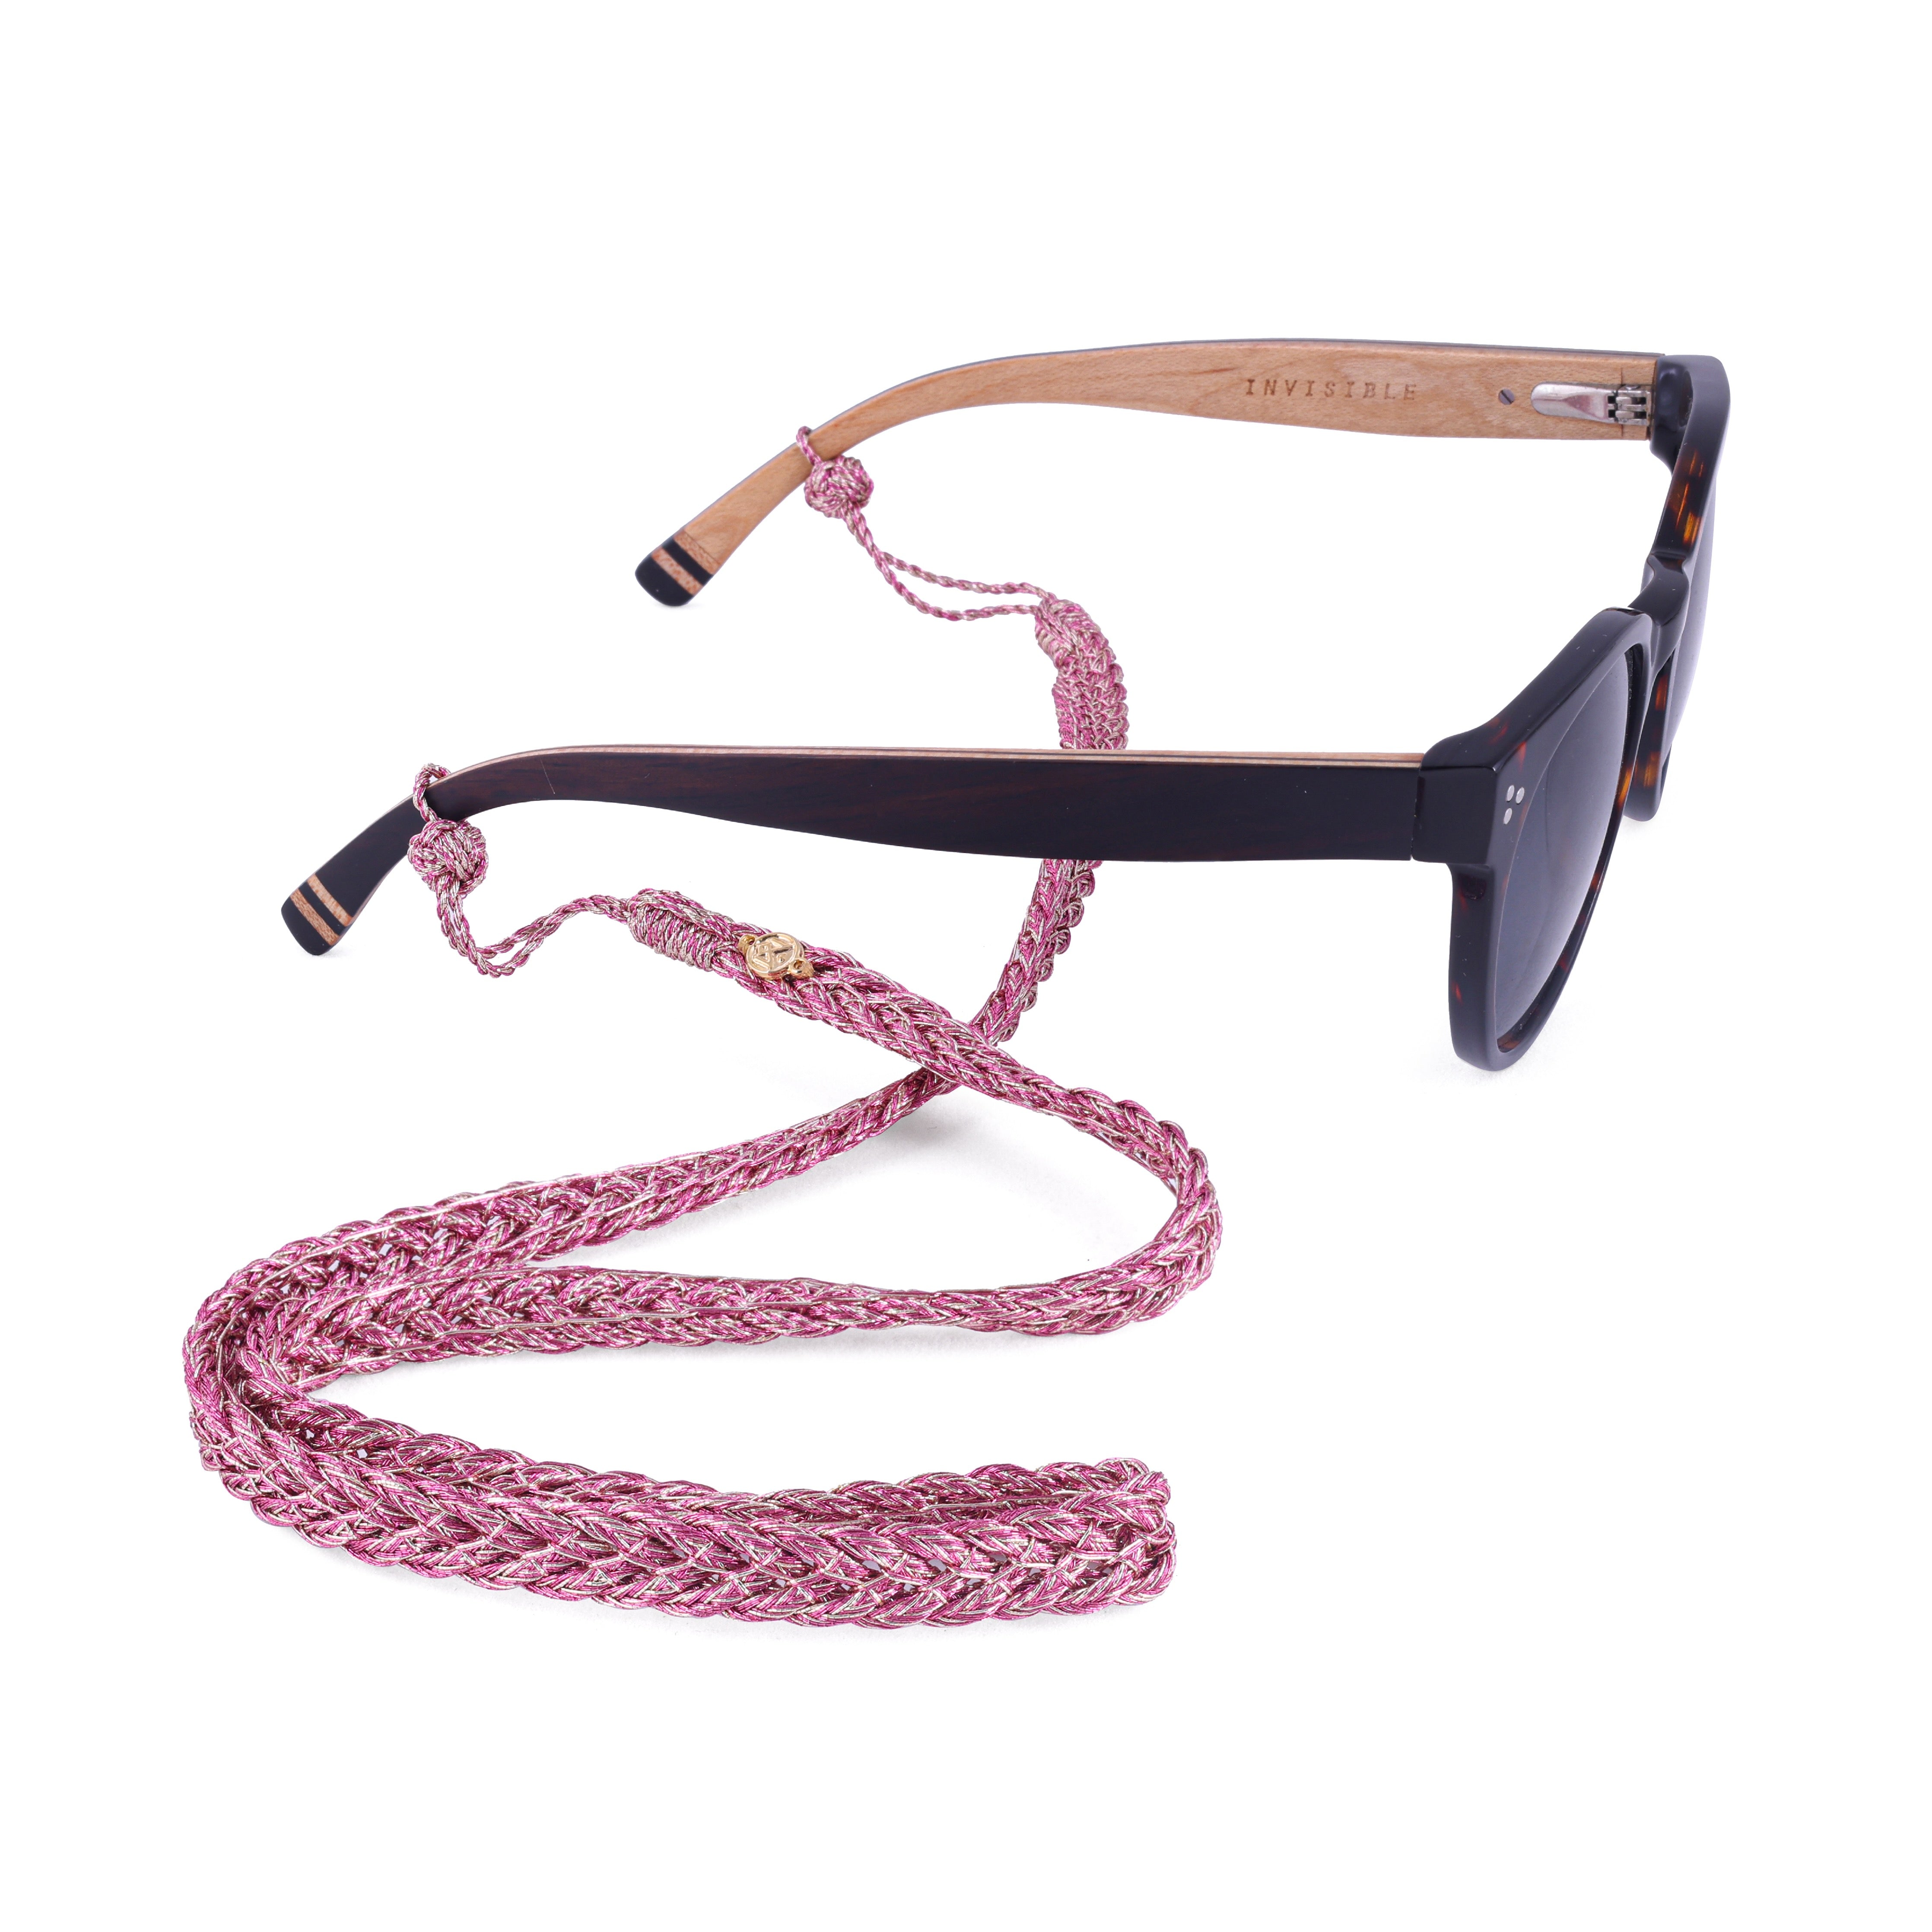 Maxi Braided Glasses Strap in Raspberry